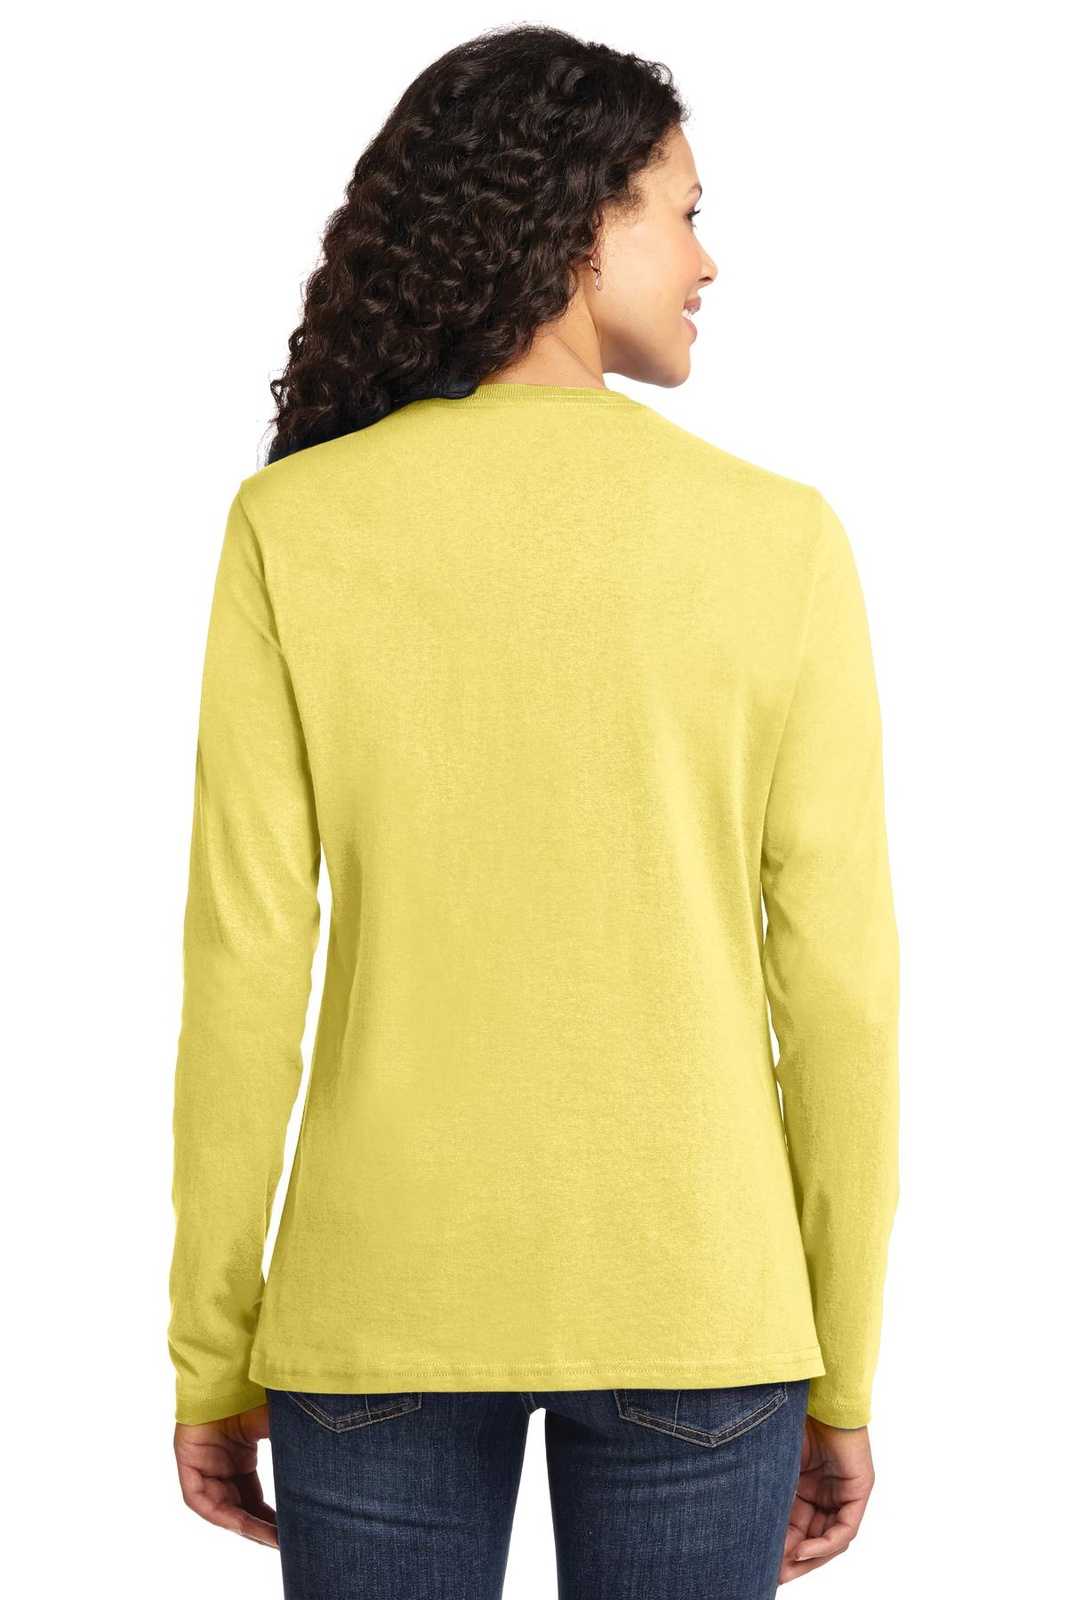 Port &amp; Company LPC54LS Ladies Long Sleeve Core Cotton Tee - Yellow - HIT a Double - 2